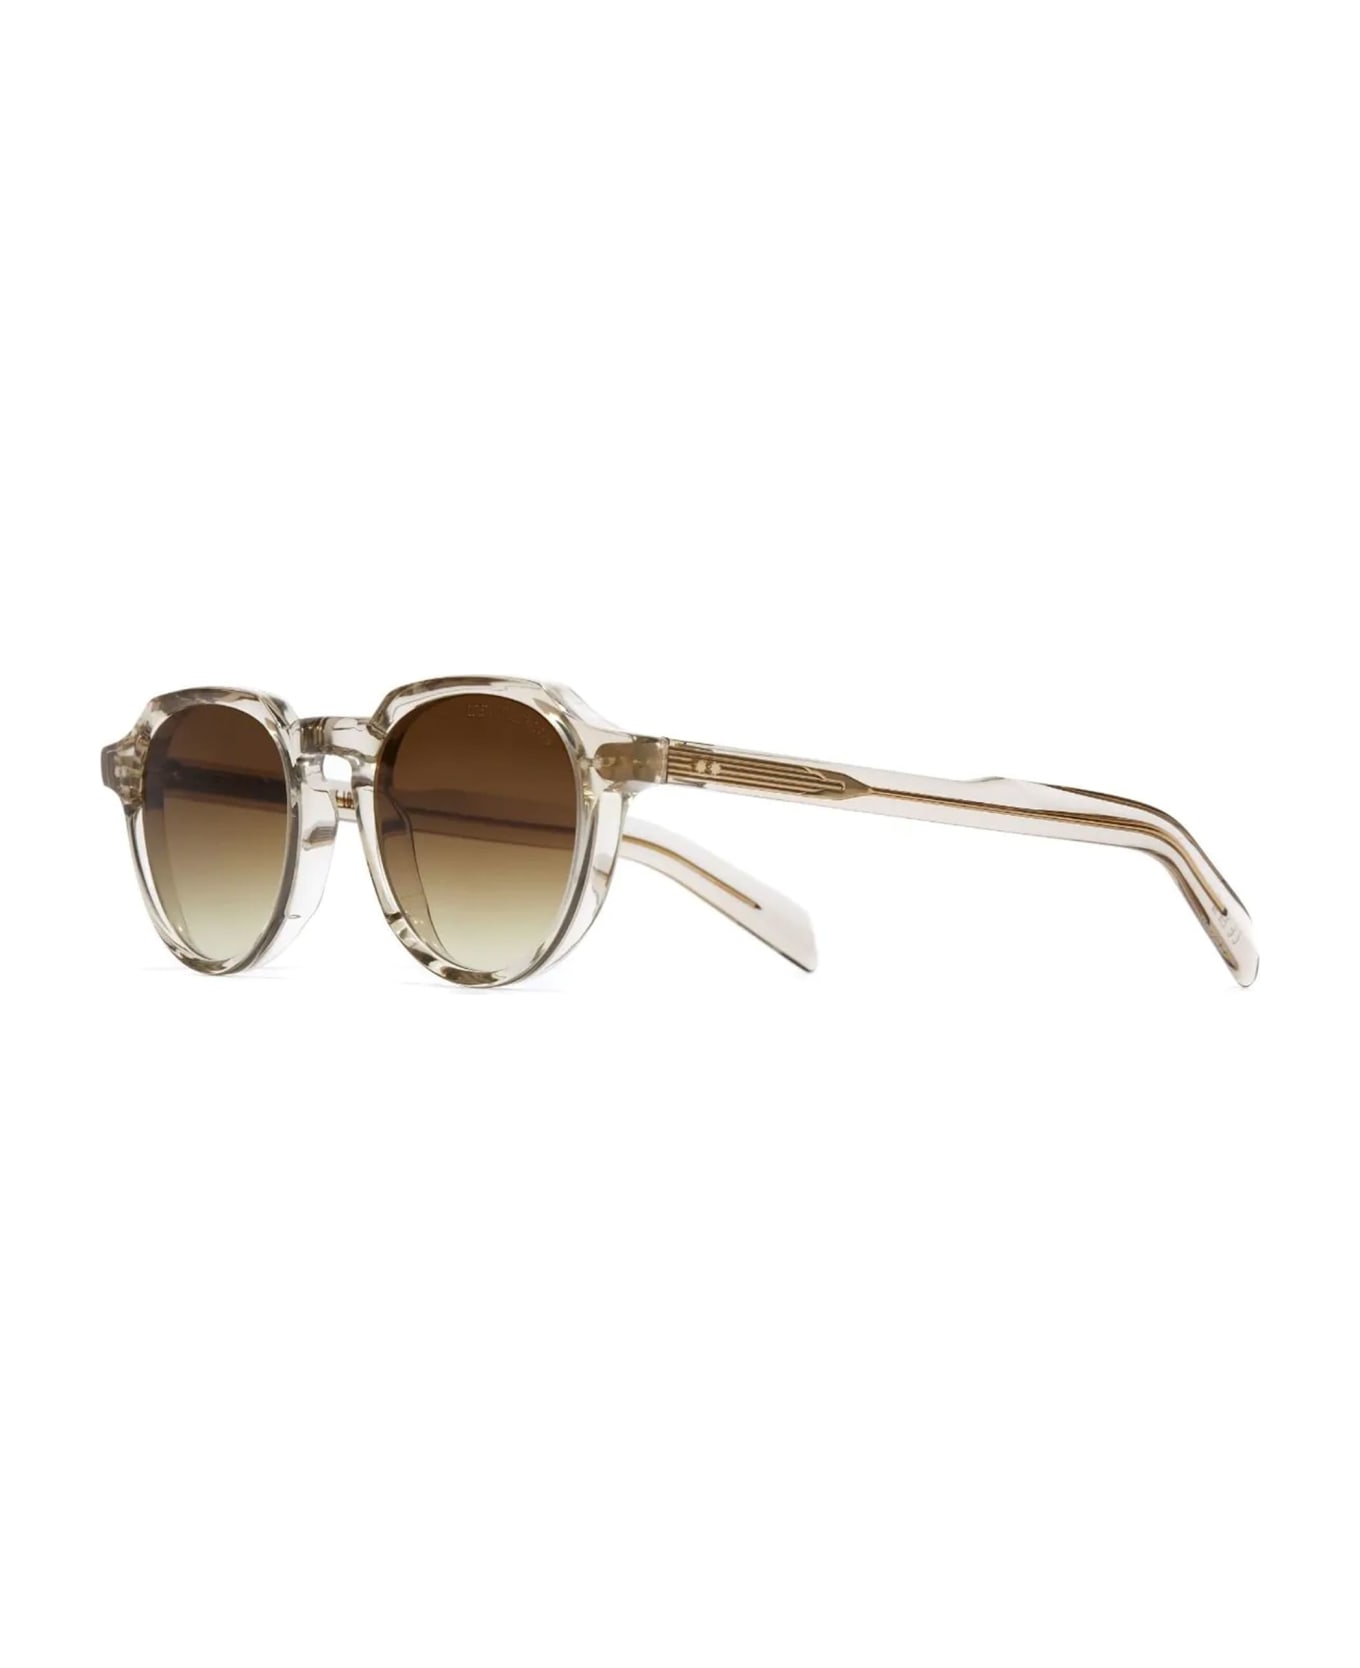 Cutler and Gross Gr06 / Sand Crystal Sunglasses - beige サングラス